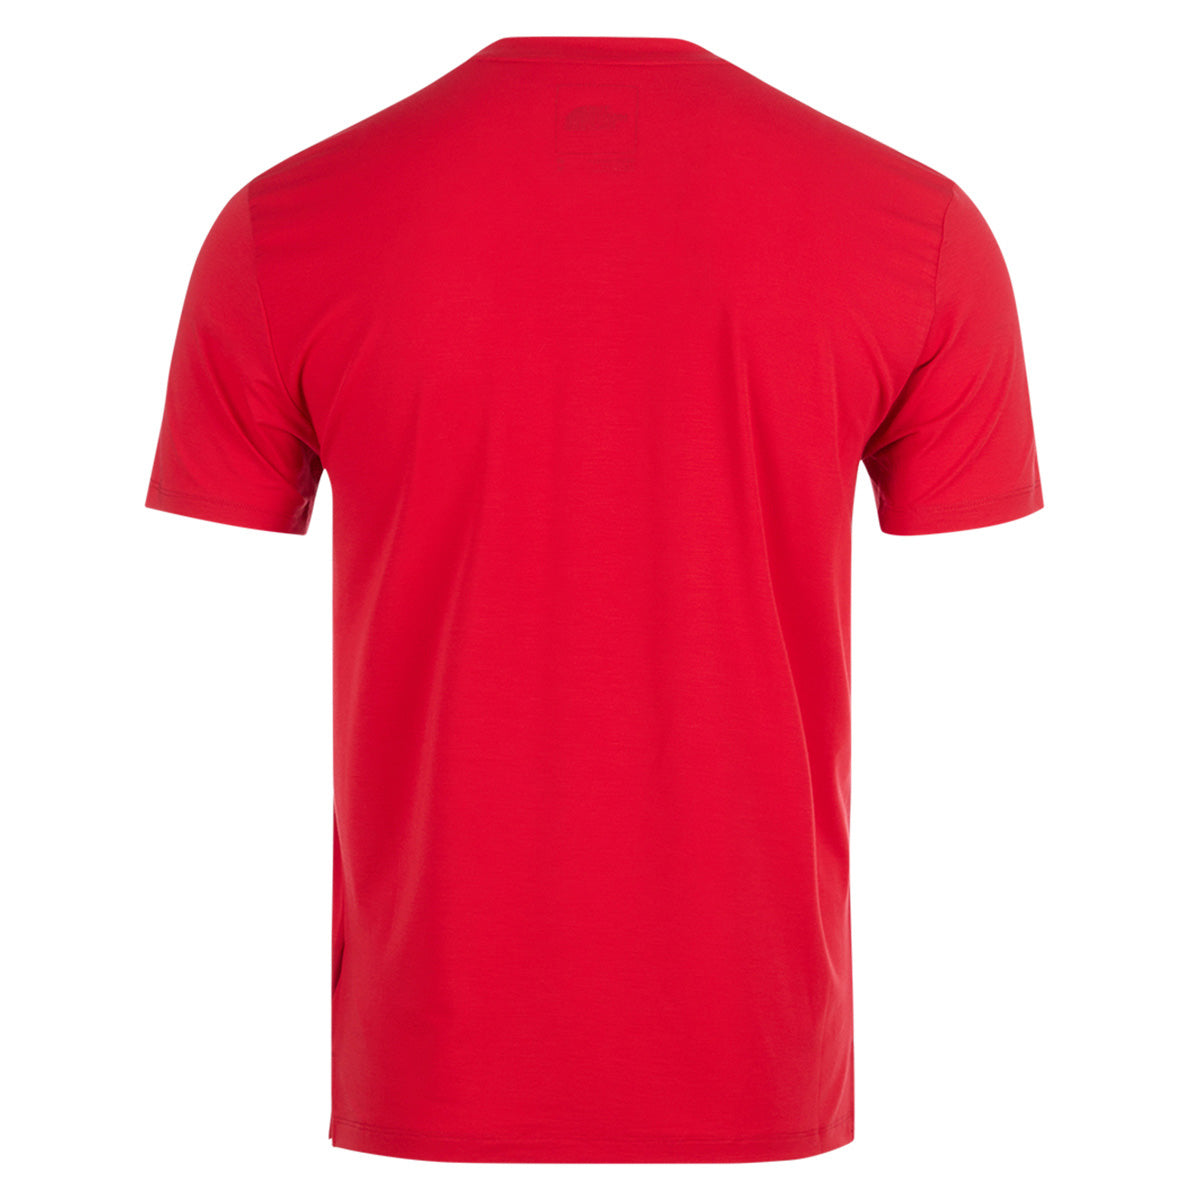 The North Face Men's Wander Short Sleeve Shirt